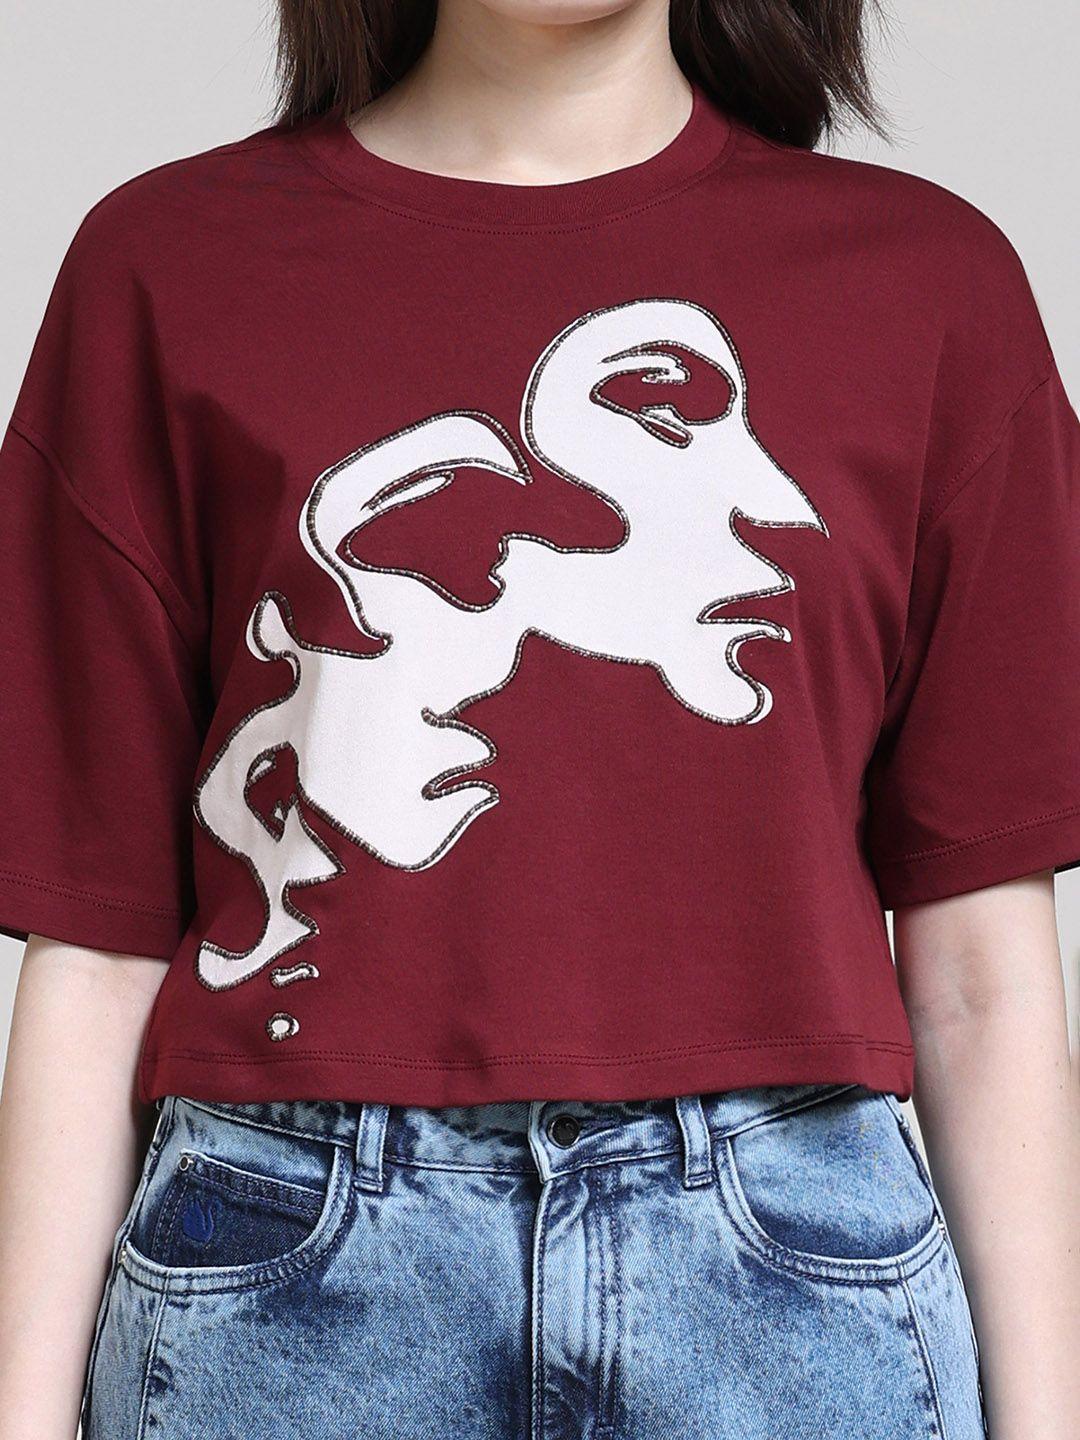 gloria vanderbilt graphic printed drop-shoulder sleeves boxy cotton t-shirt